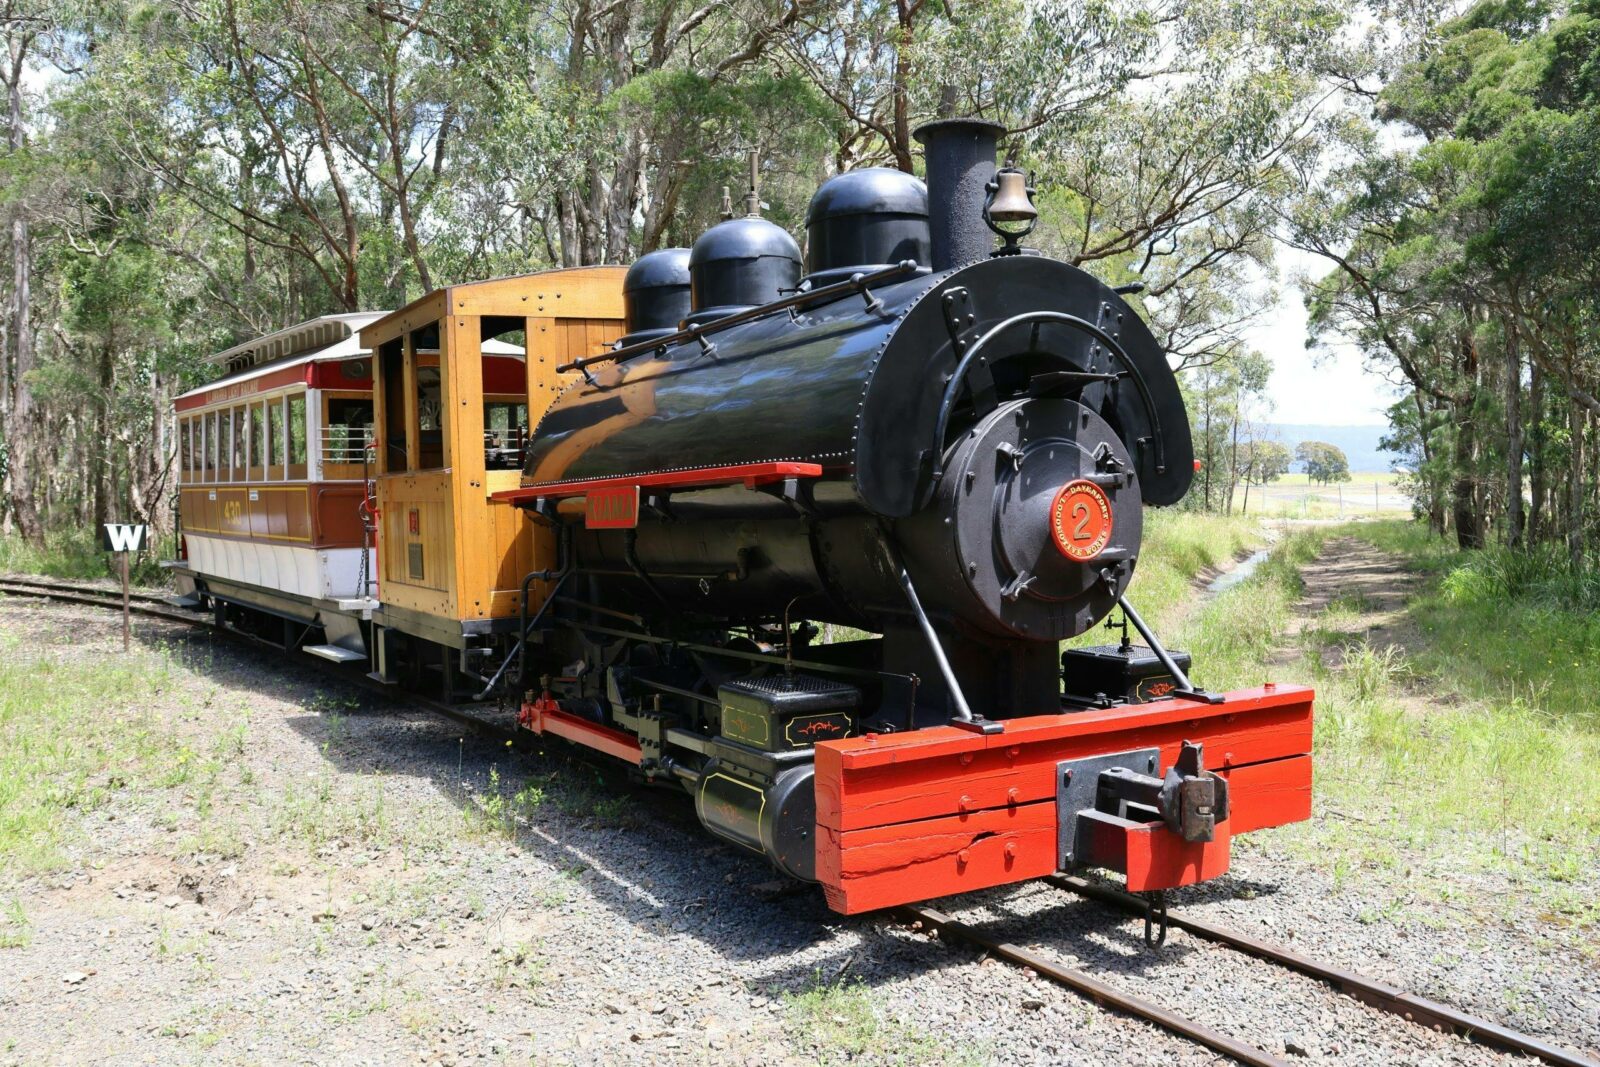 The Steamer at the Illawarra Light Railway Museum